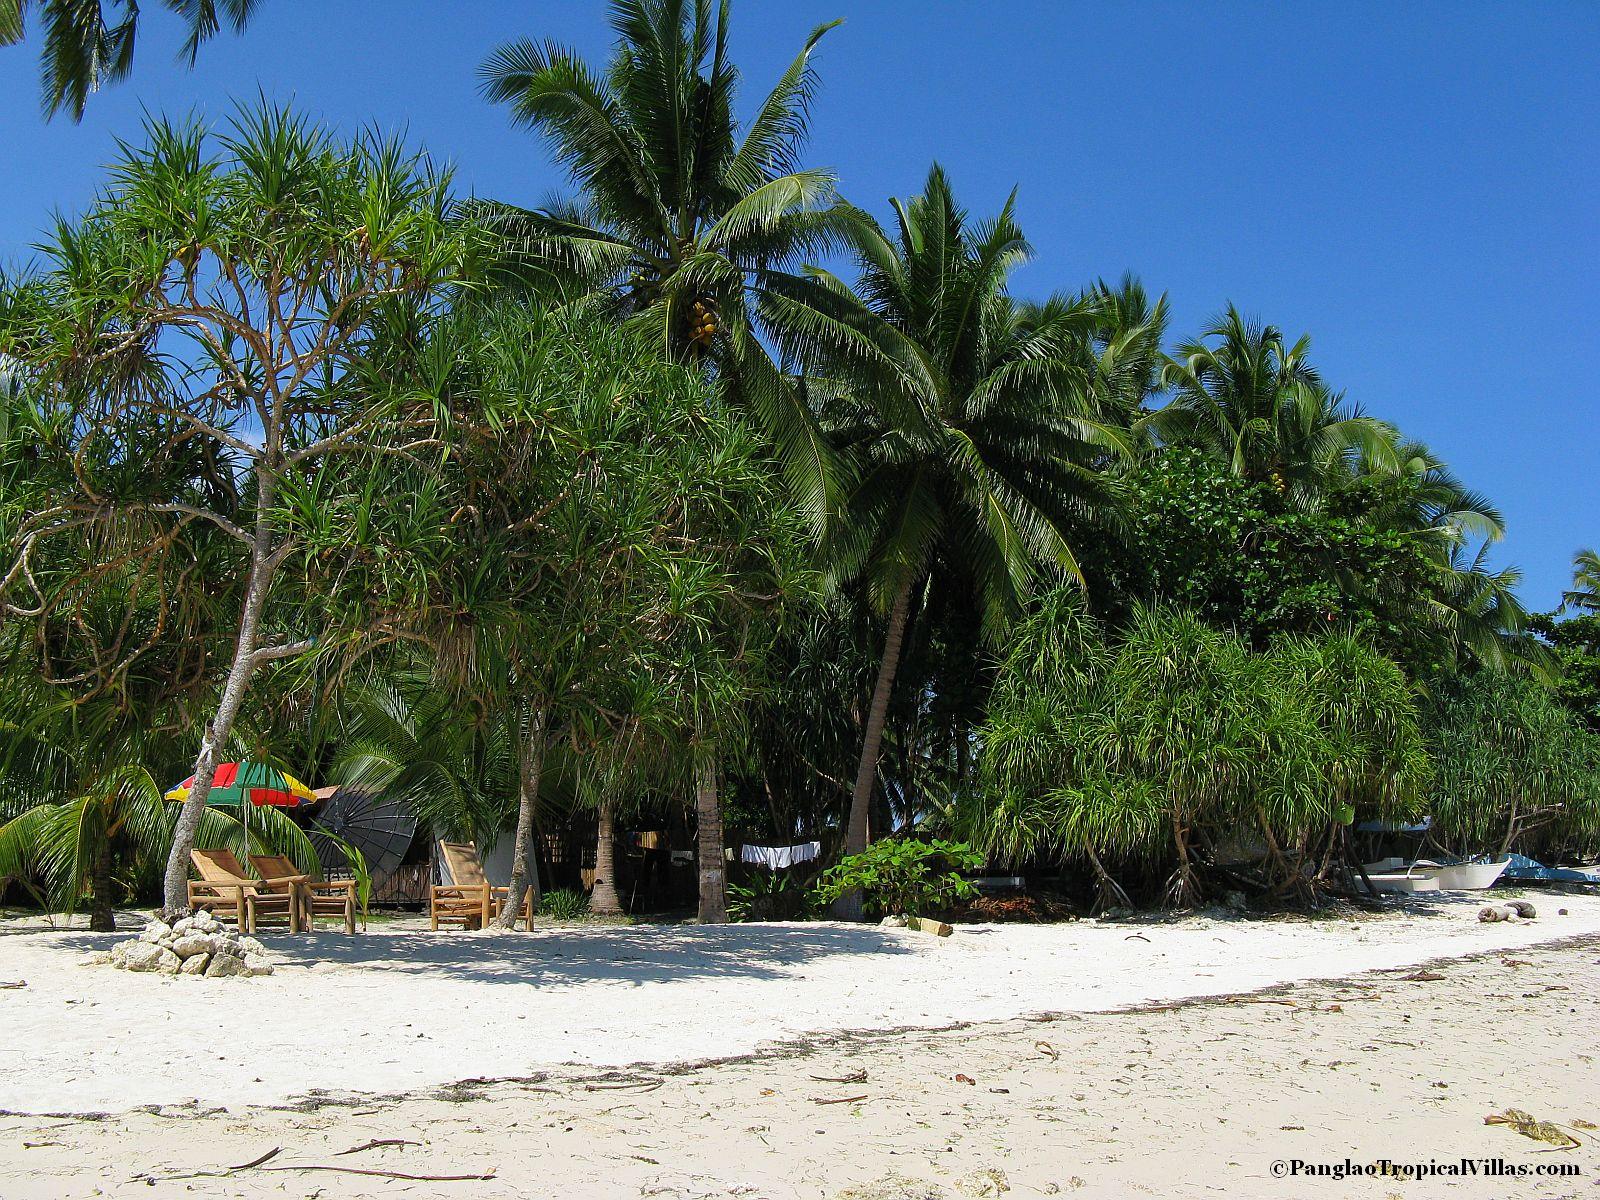 Panglao tropical villas bohol beach resort 0124